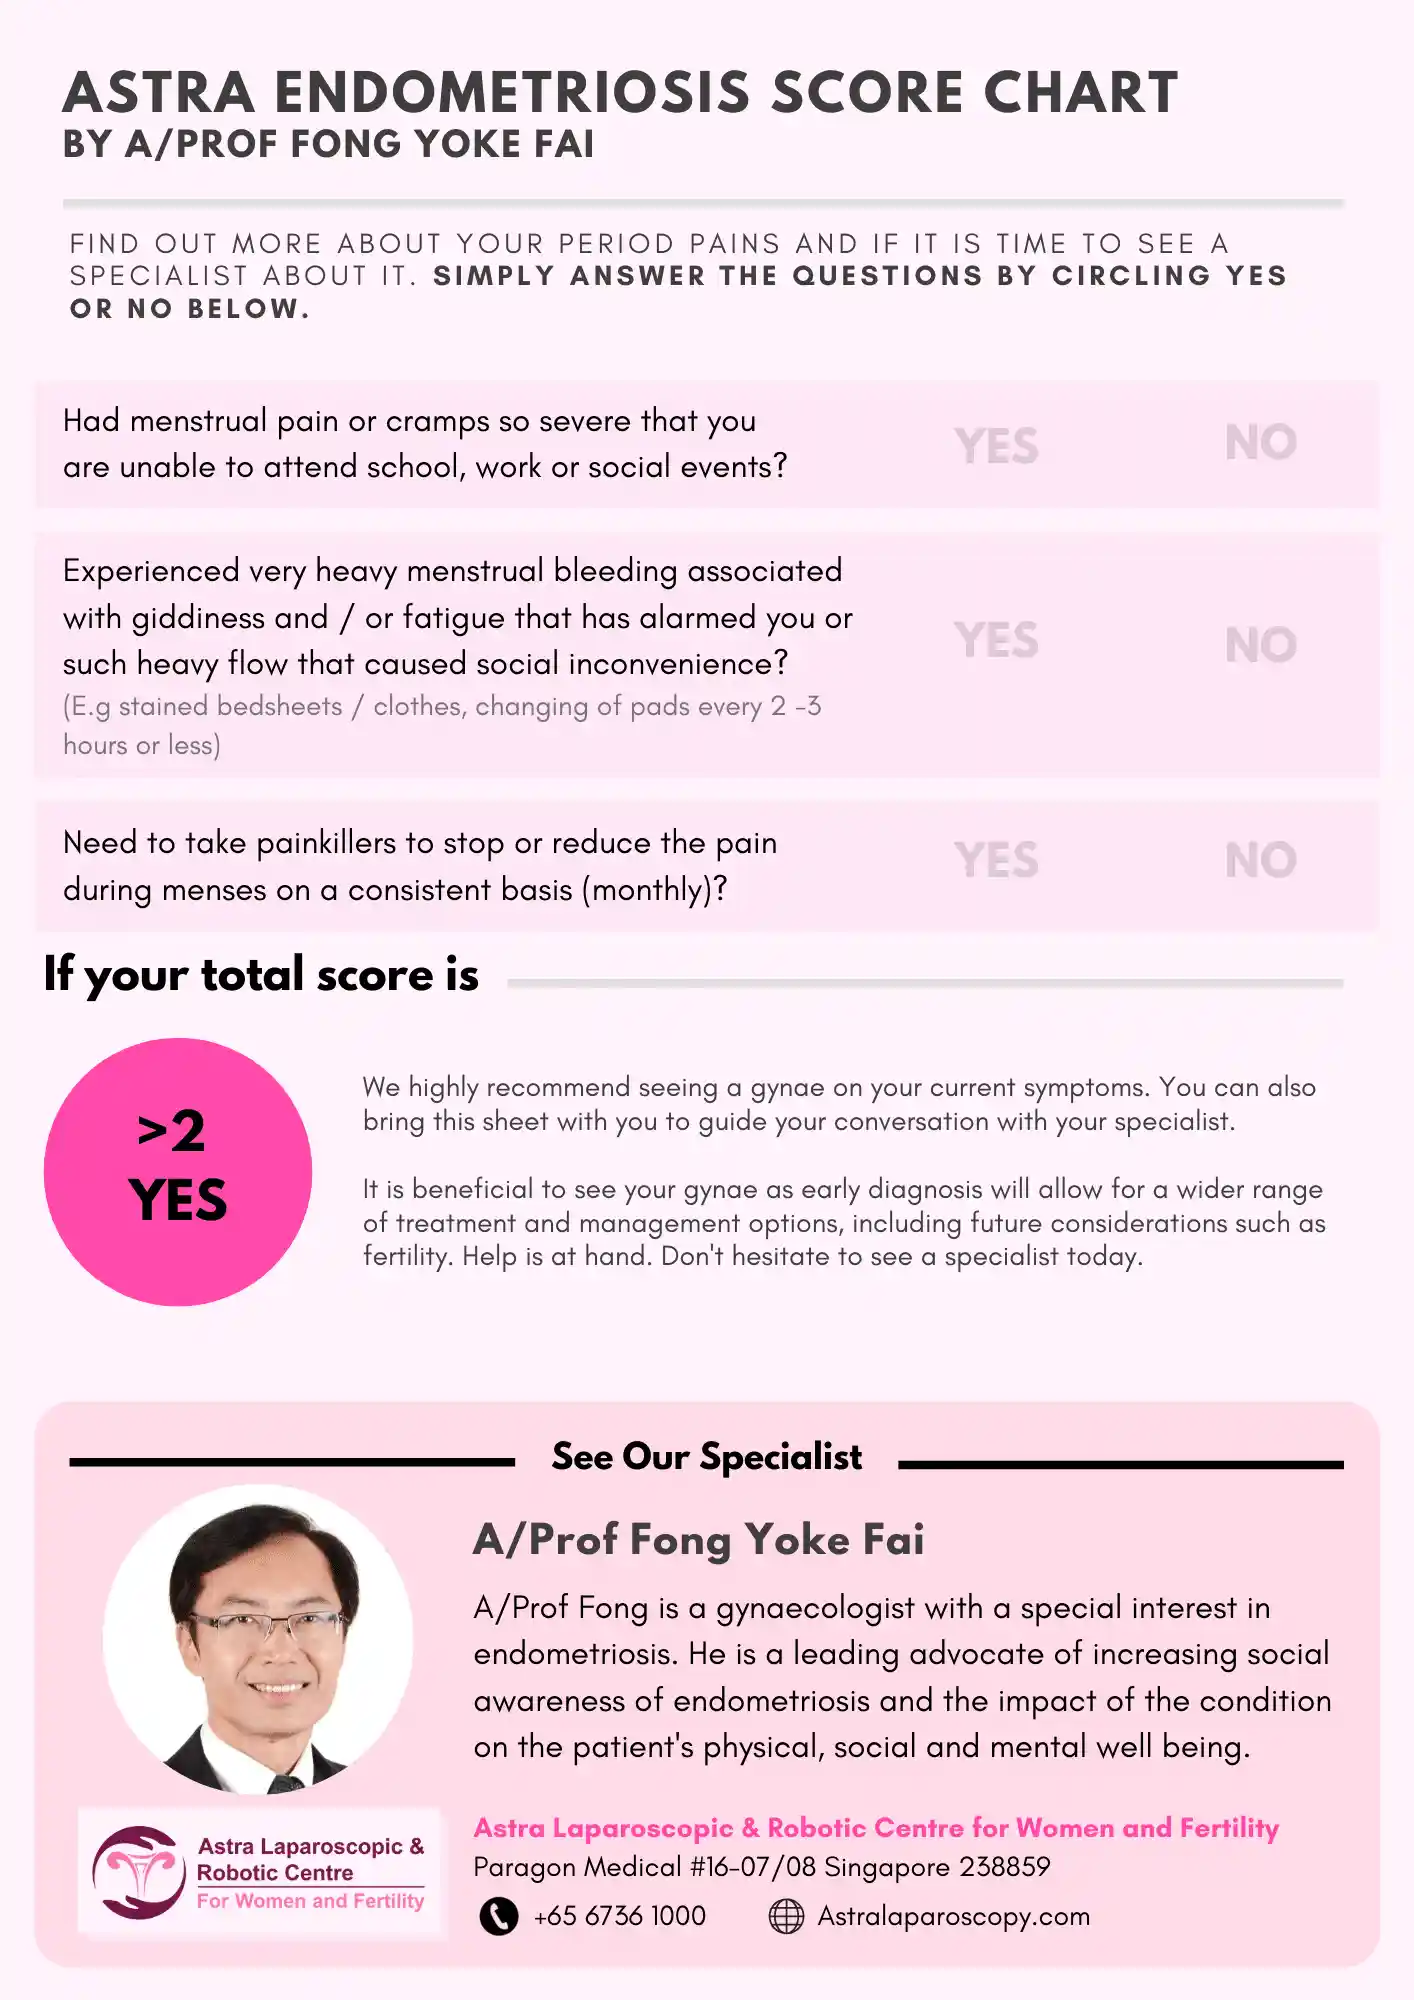 astra endometriosis score chart by A/Prof Fong Yoke Fai